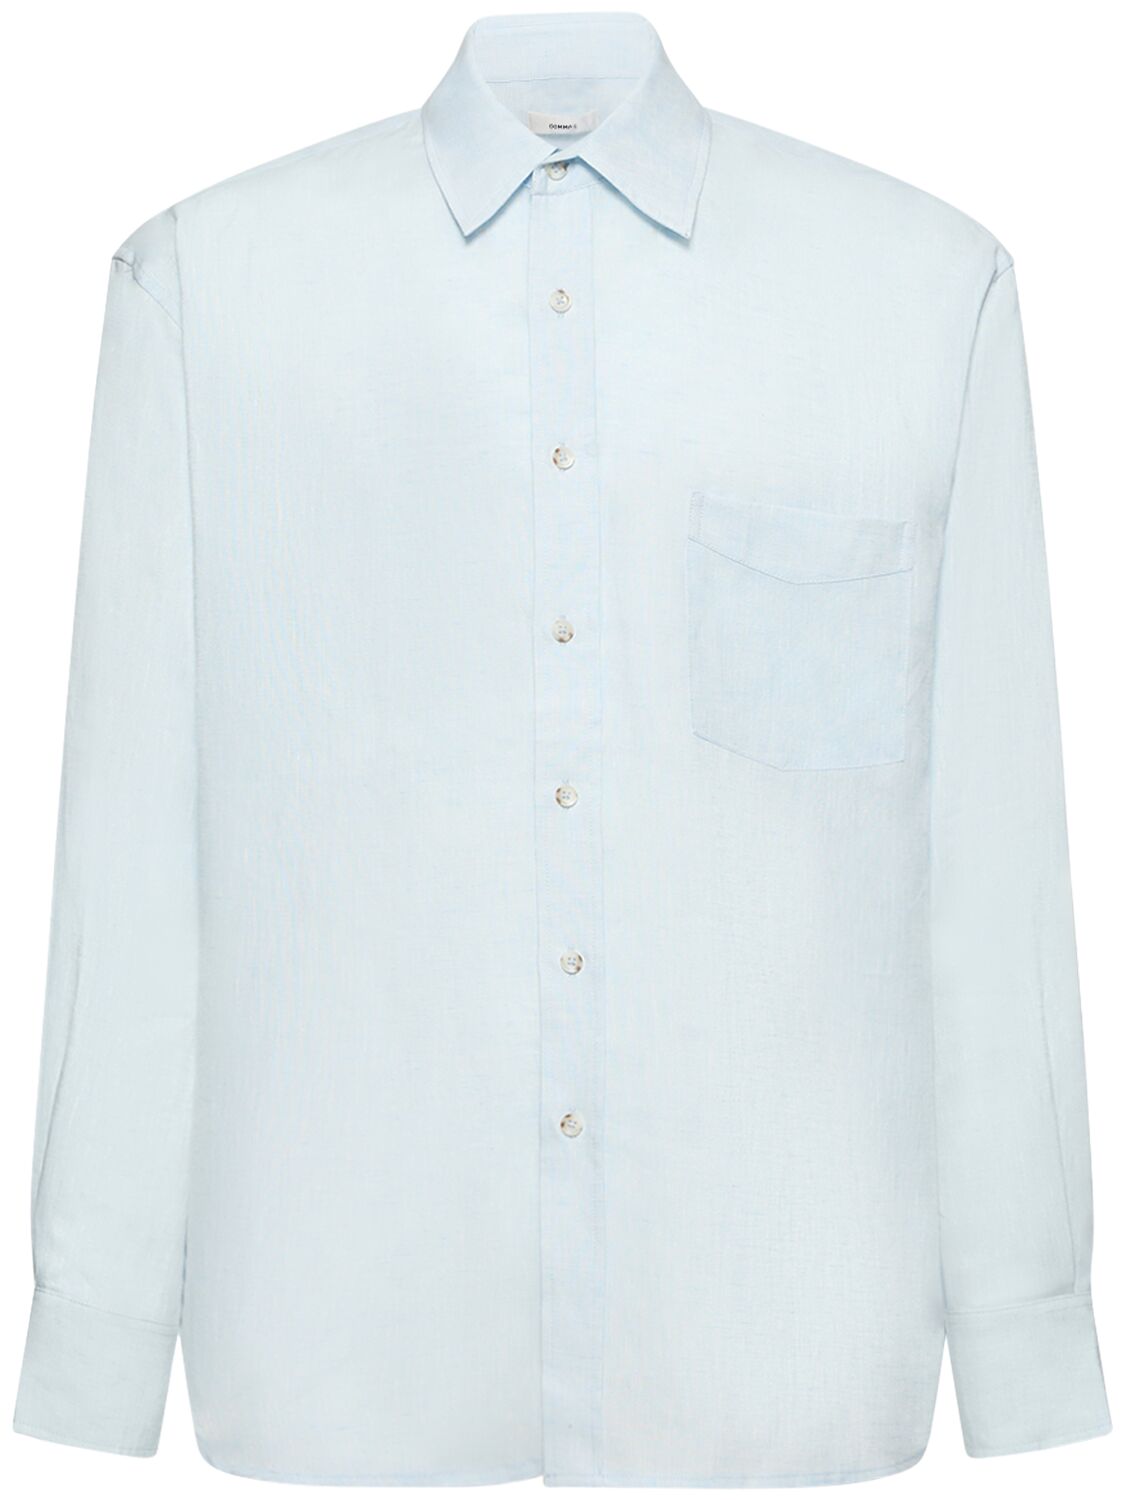 COMMAS Oversize Linen Shirt W/ Pocket